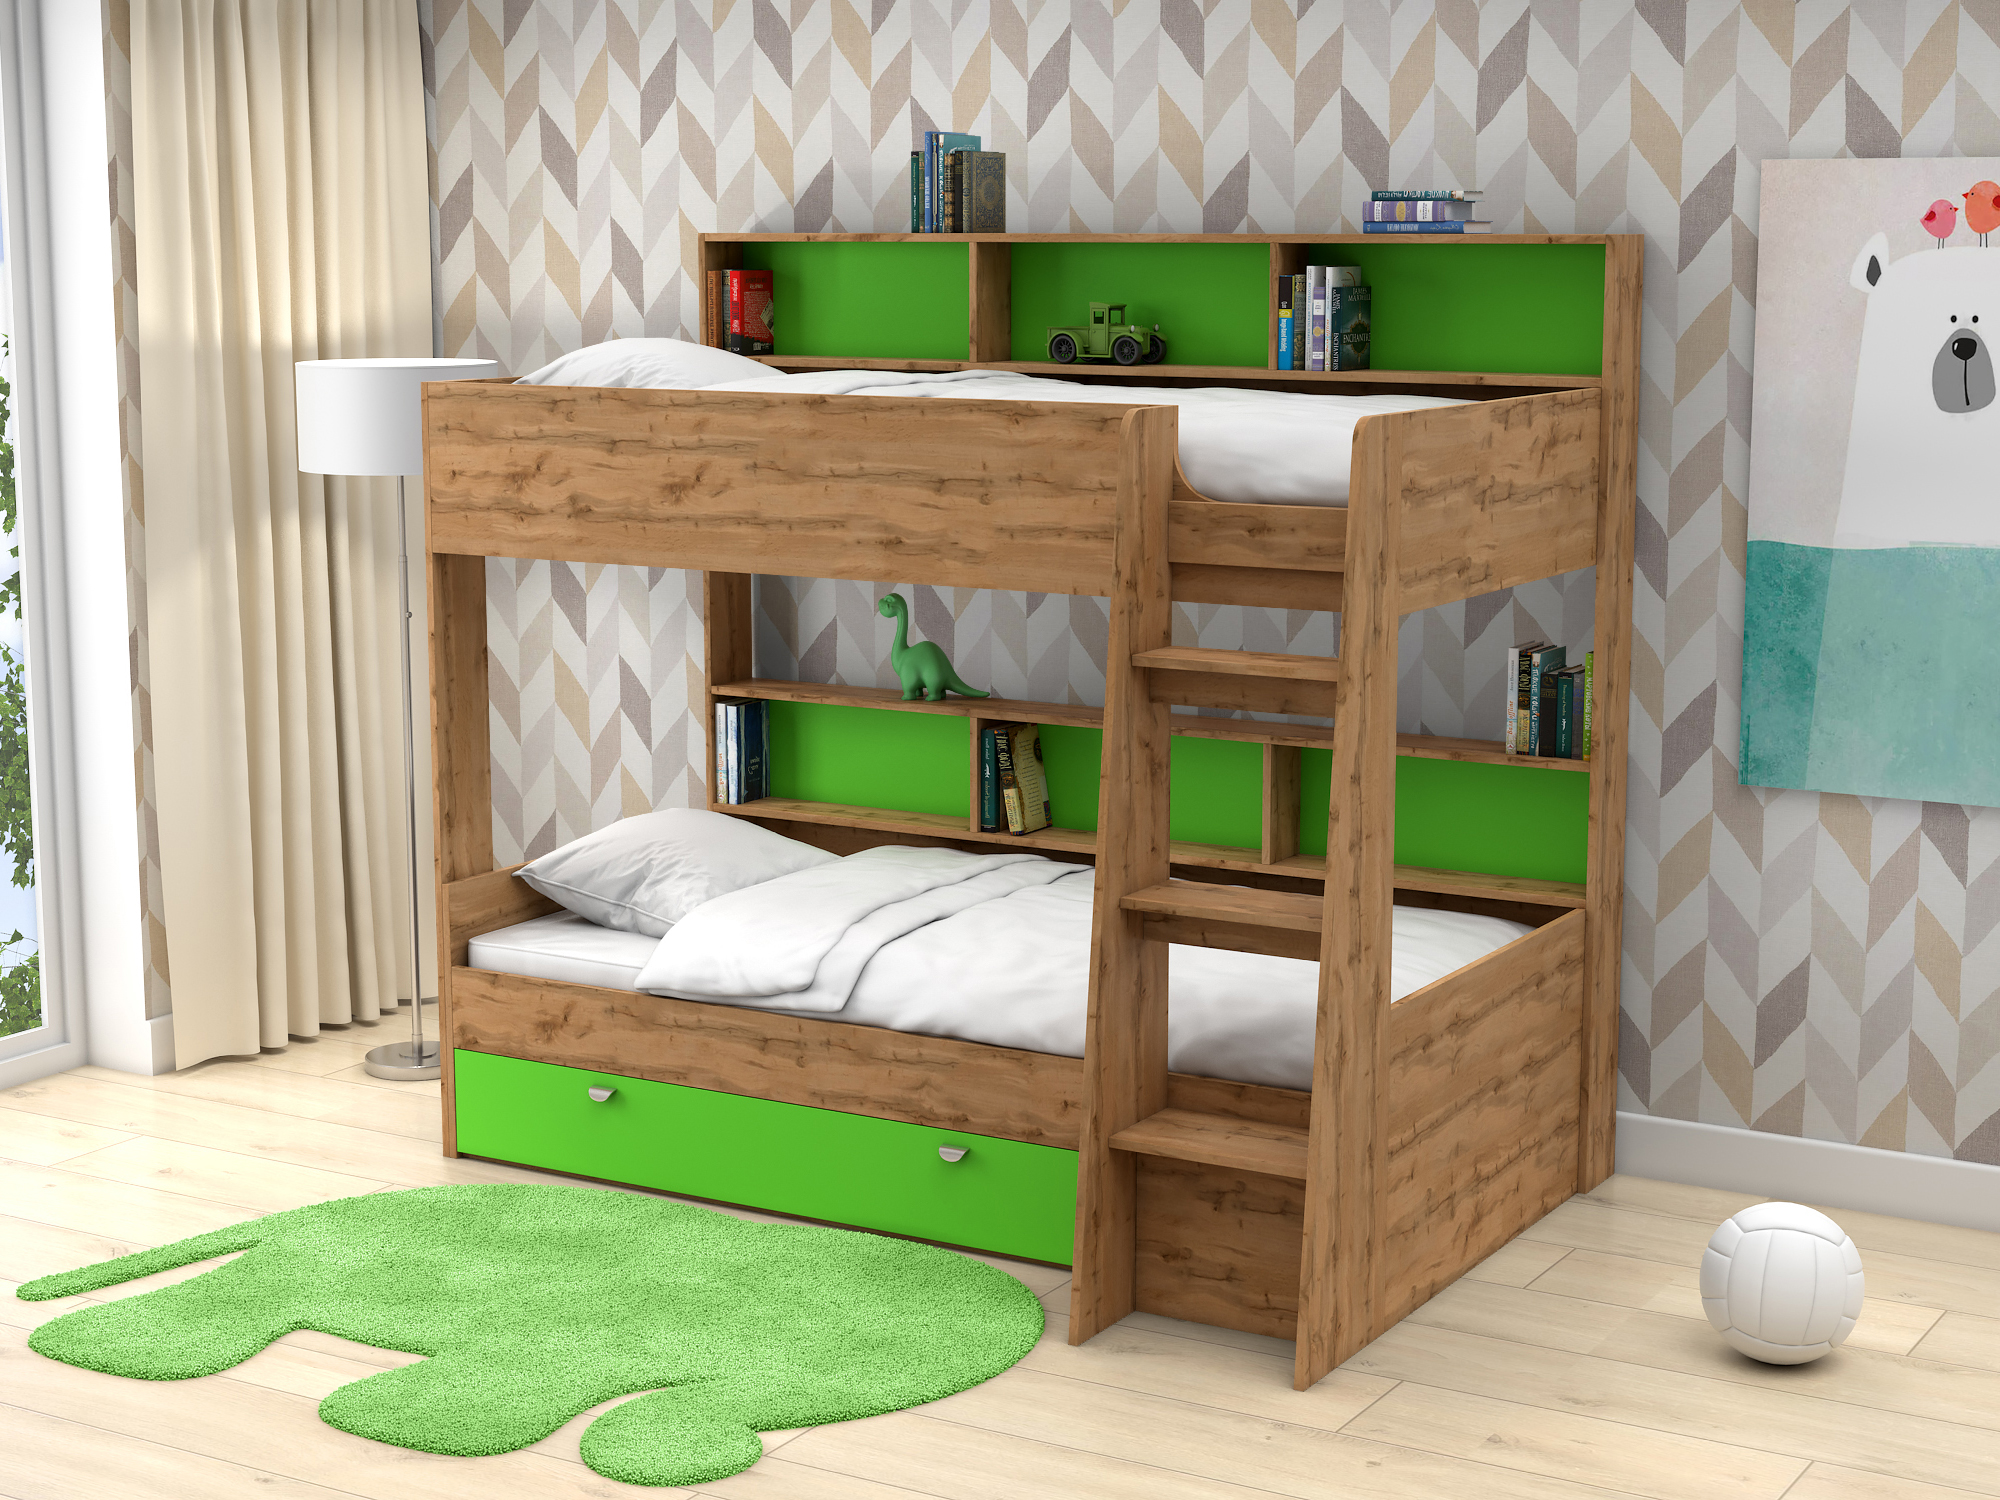 Двухъярусная кровать Golden Kids-1 (90х200) Зеленый, Бежевый, ЛДСП кровать двухъярусная ассоль плюс 90х200 ваниль бежевый мдф лдсп